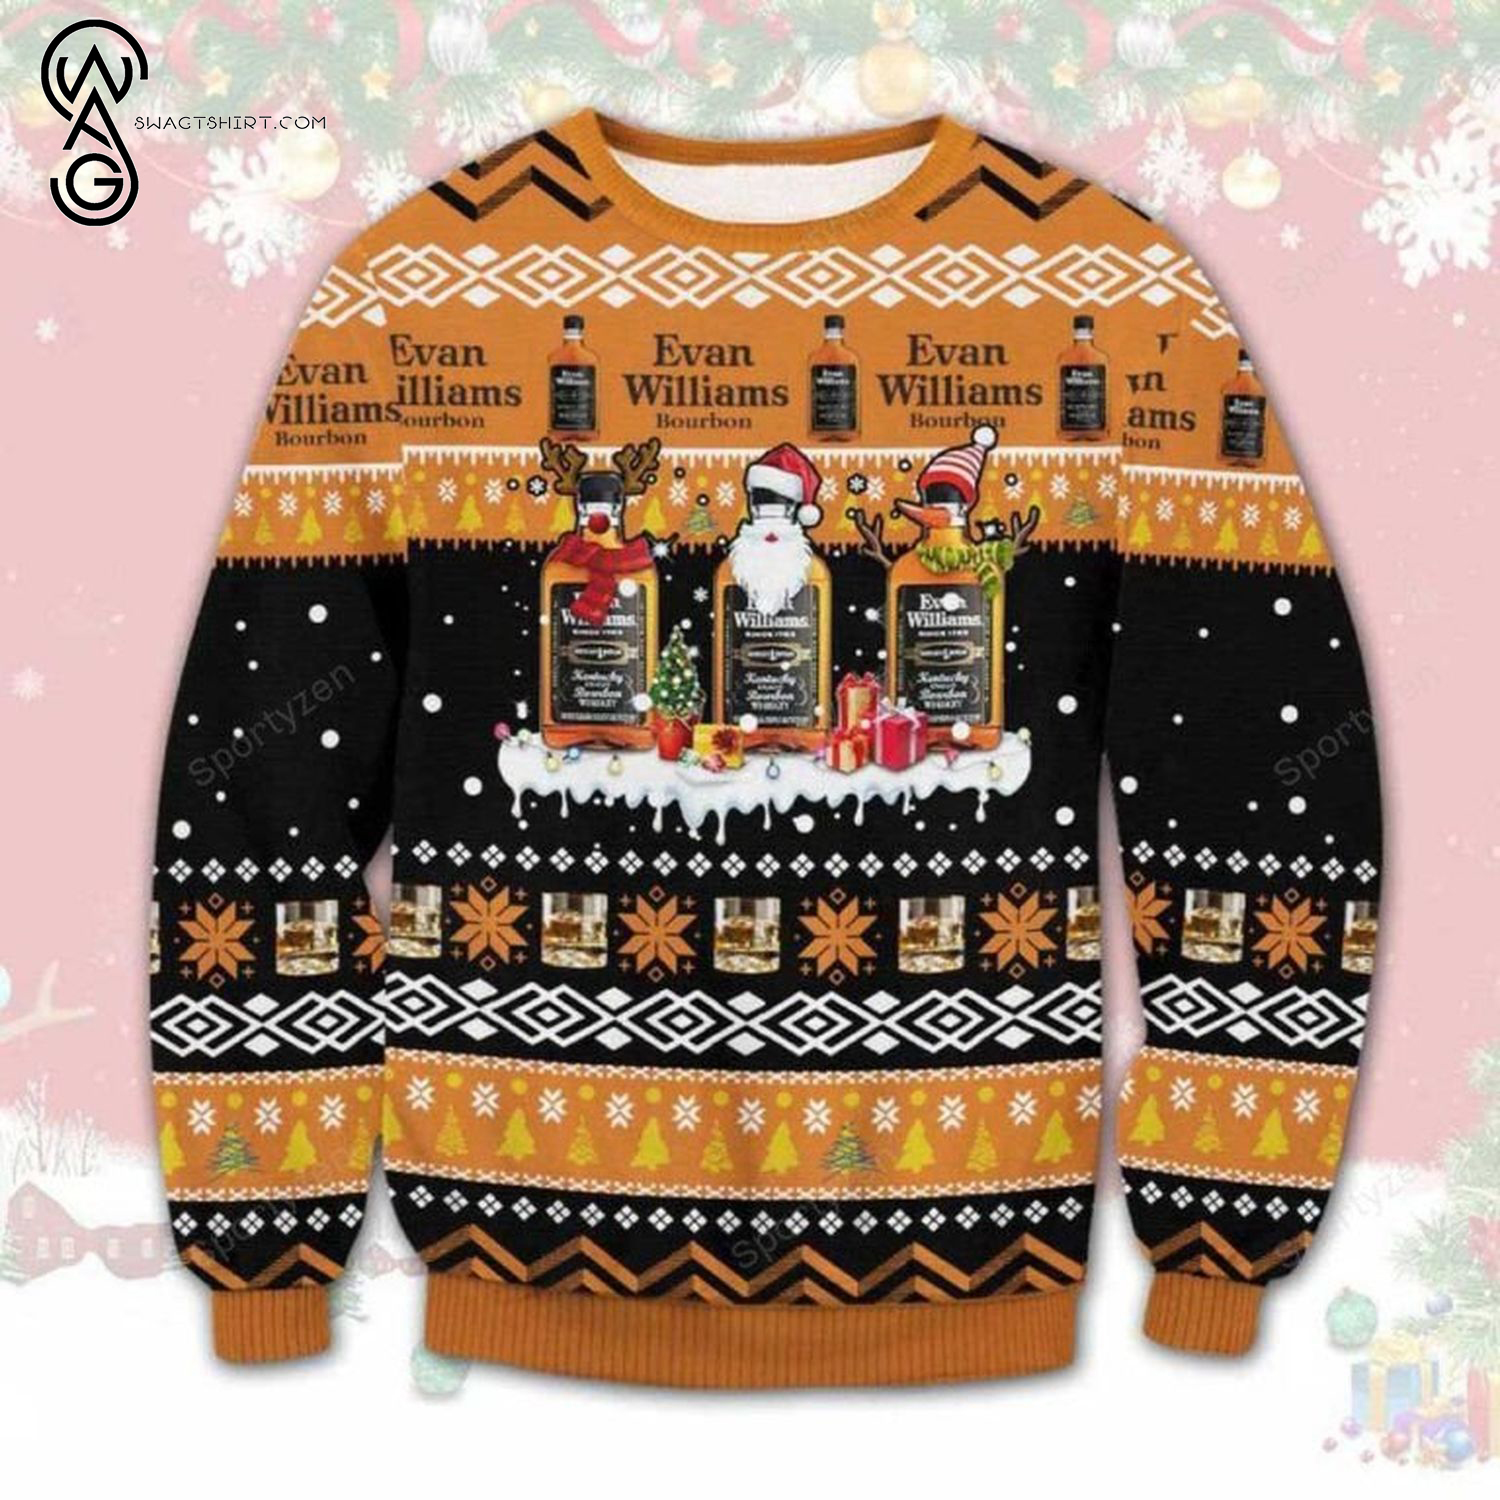 Evan Williams Bourbon Full Print Ugly Christmas Sweater